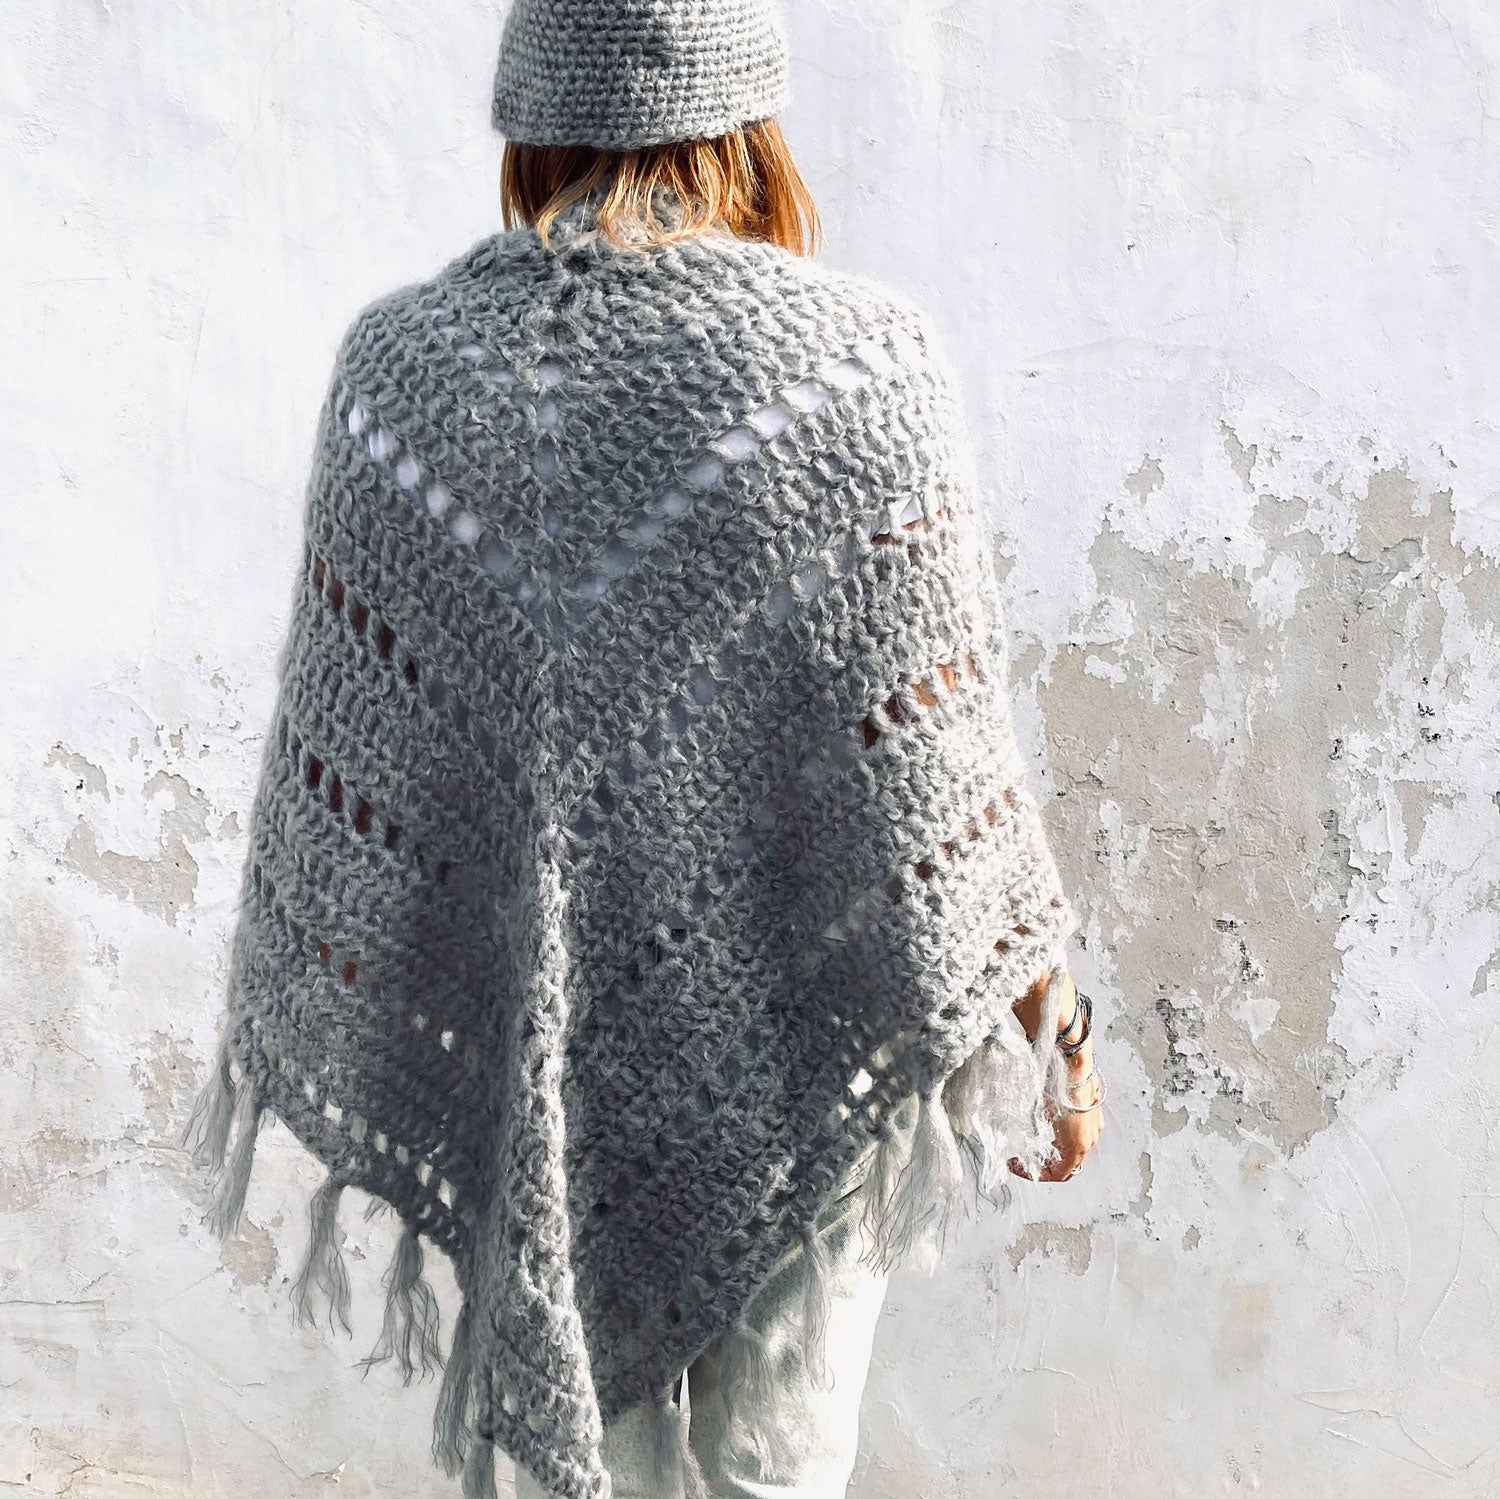 Gorgeous Crochet Prayer Shawl Patterns - Crochet 365 Knit Too